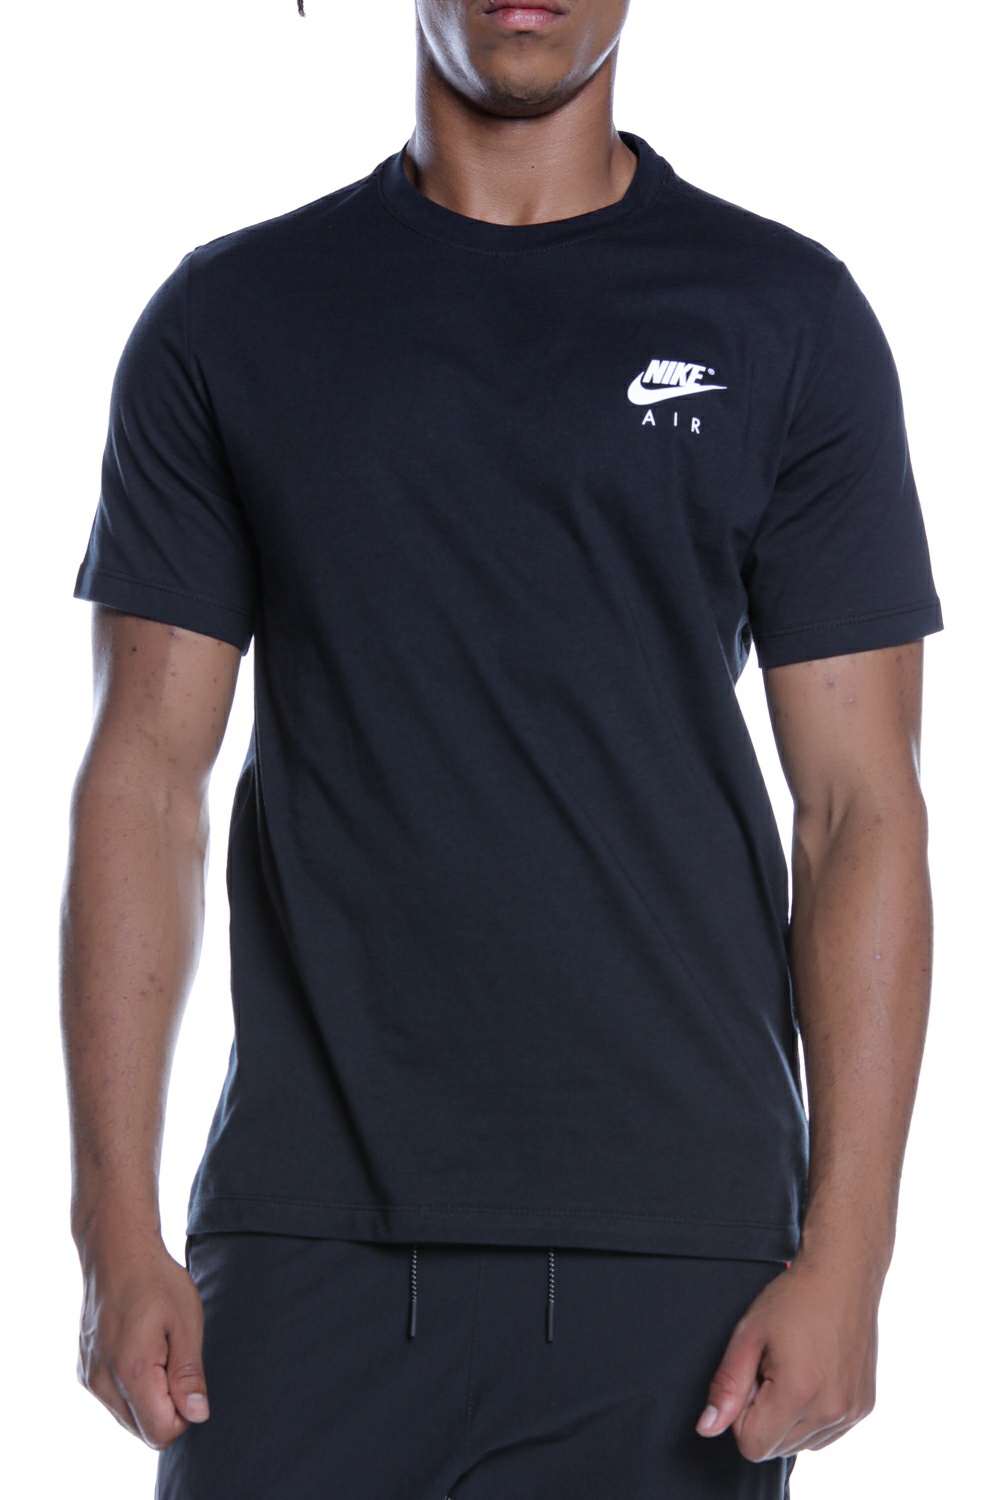 NIKE – Ανδρικό t-shirt NIKE M NSW TEE NIKE AIR GX μαύρο 1806257.1-7171